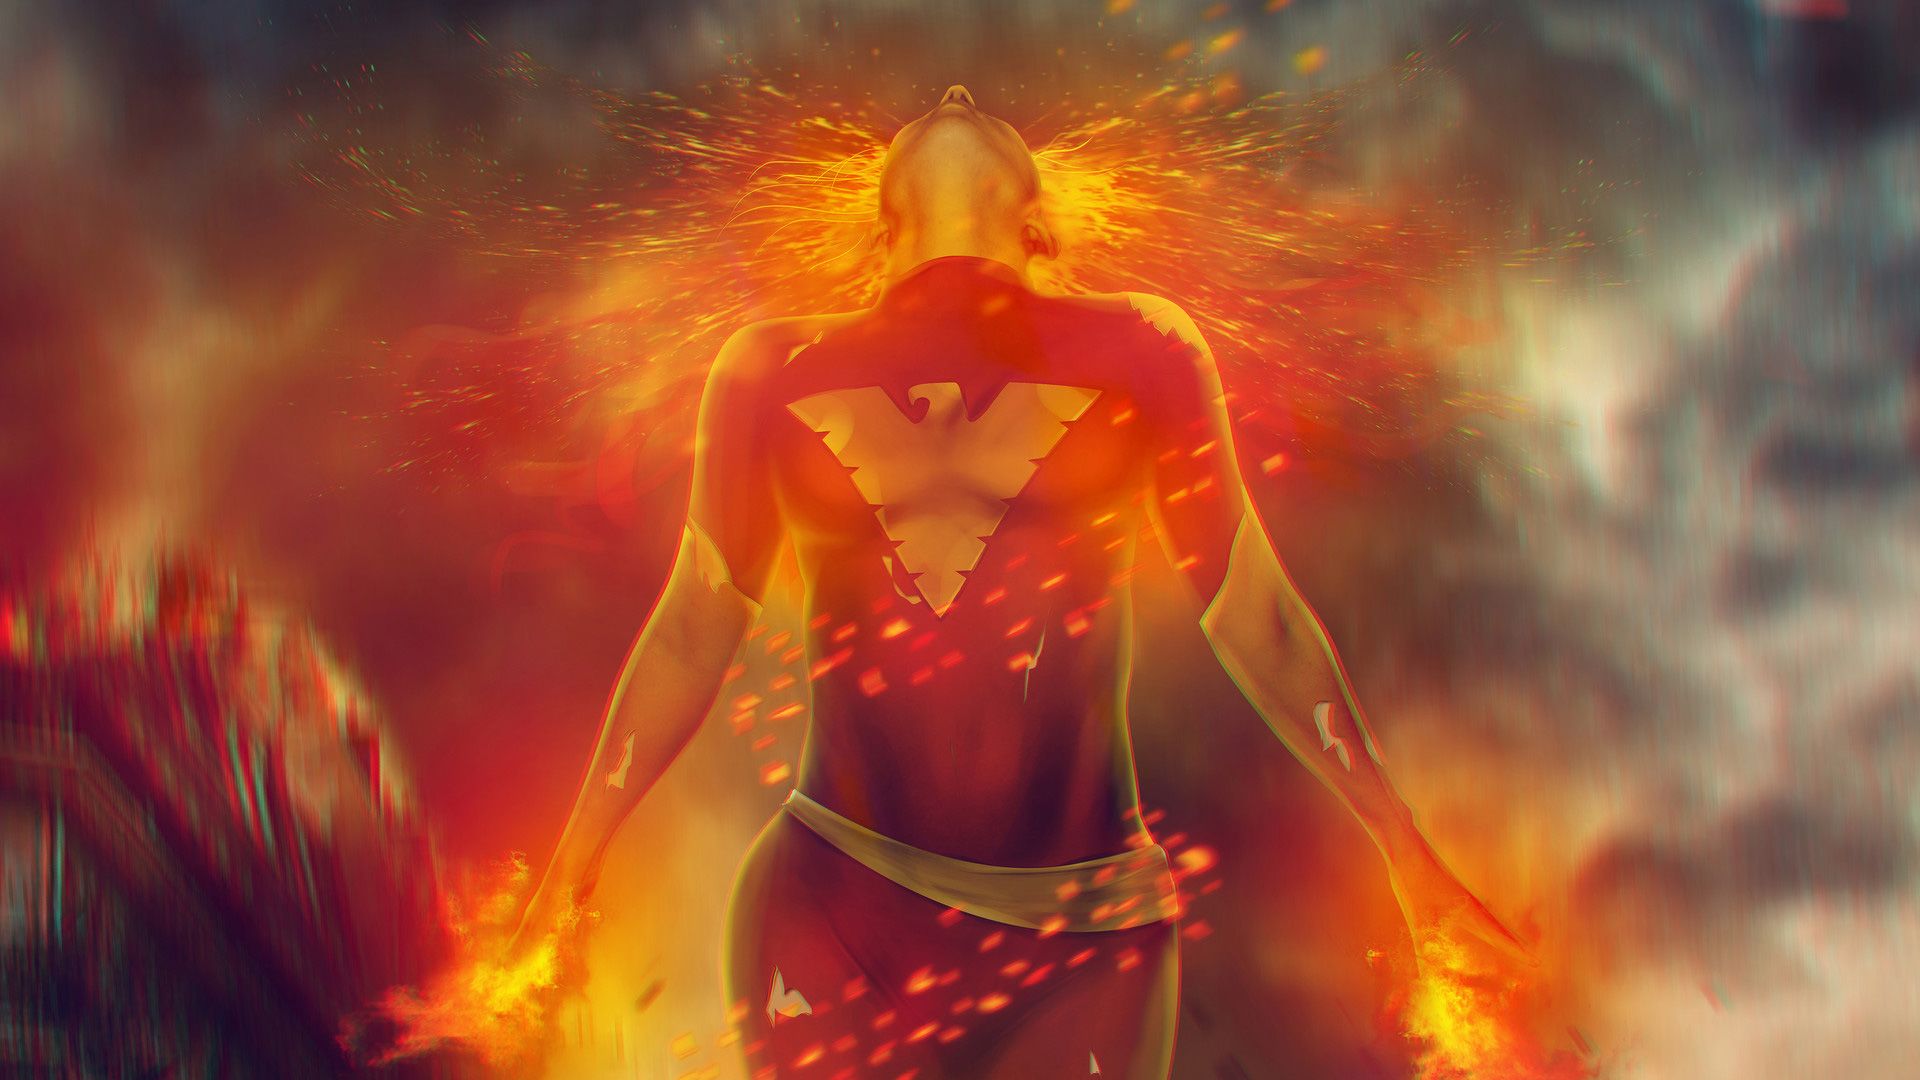 Jean Grey In Xmen Dark Phoenix Art, HD Superheroes, 4k Wallpaper, Image, Background, Photo and Picture